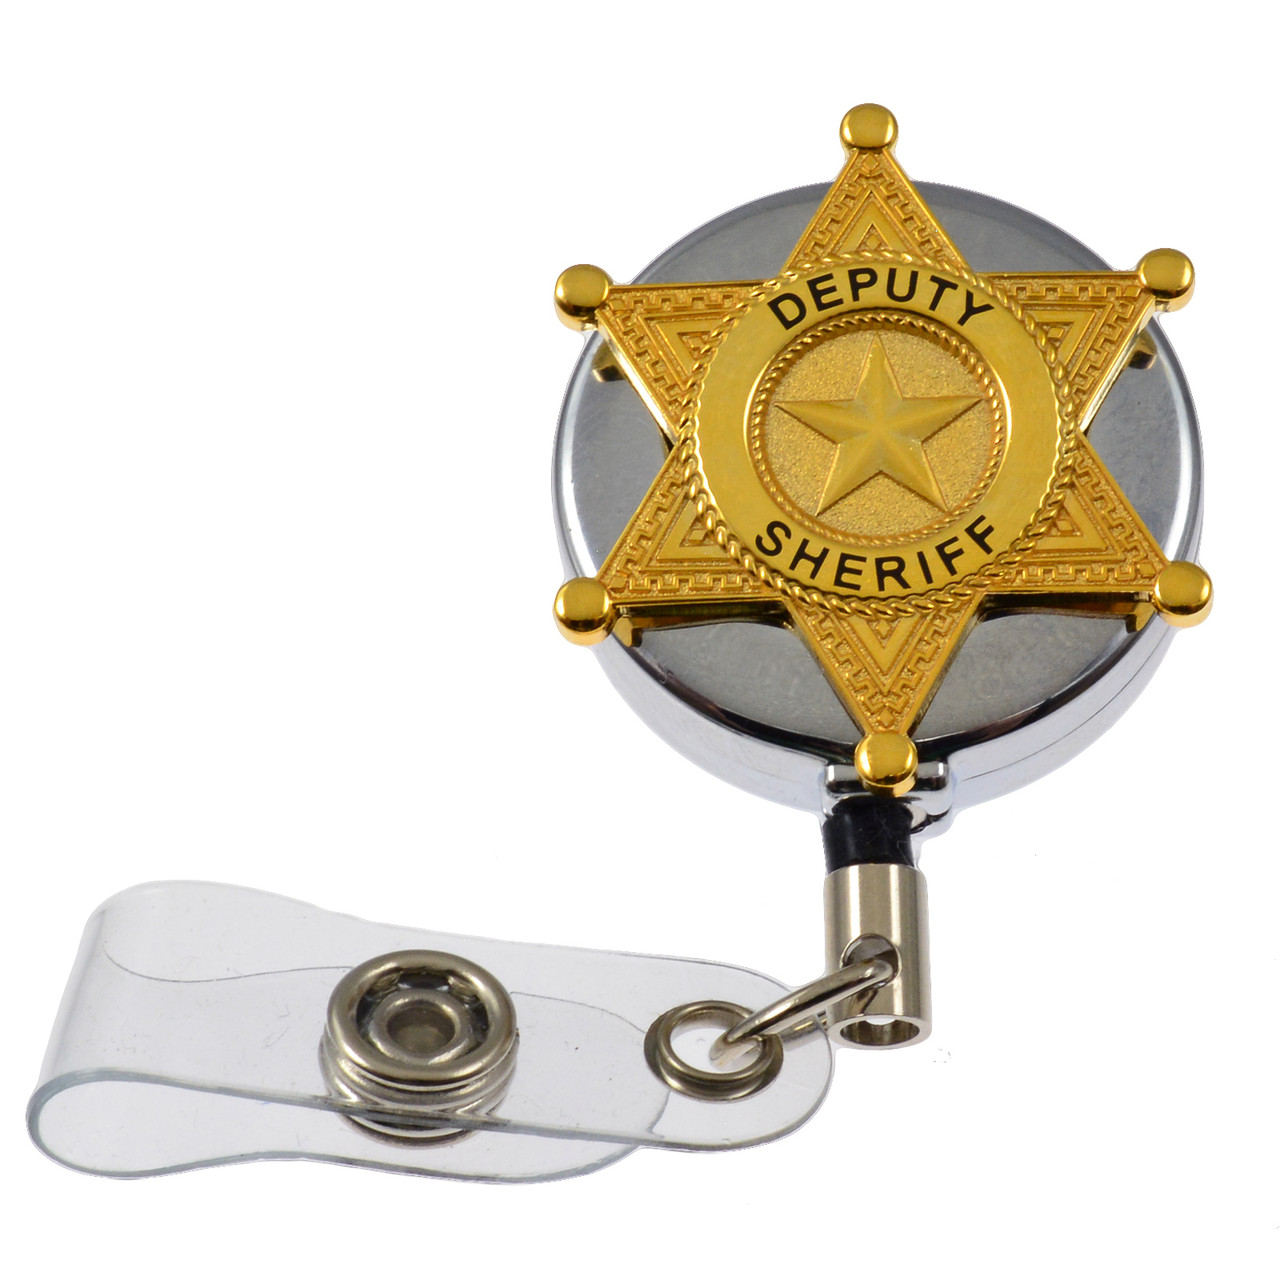 Police Badge Reel | Badge Reel | Badge Reel Cute | Law Enforcement Badge  Reel | Retractable Badge Clip | Badge Holder | Badge Reel Police